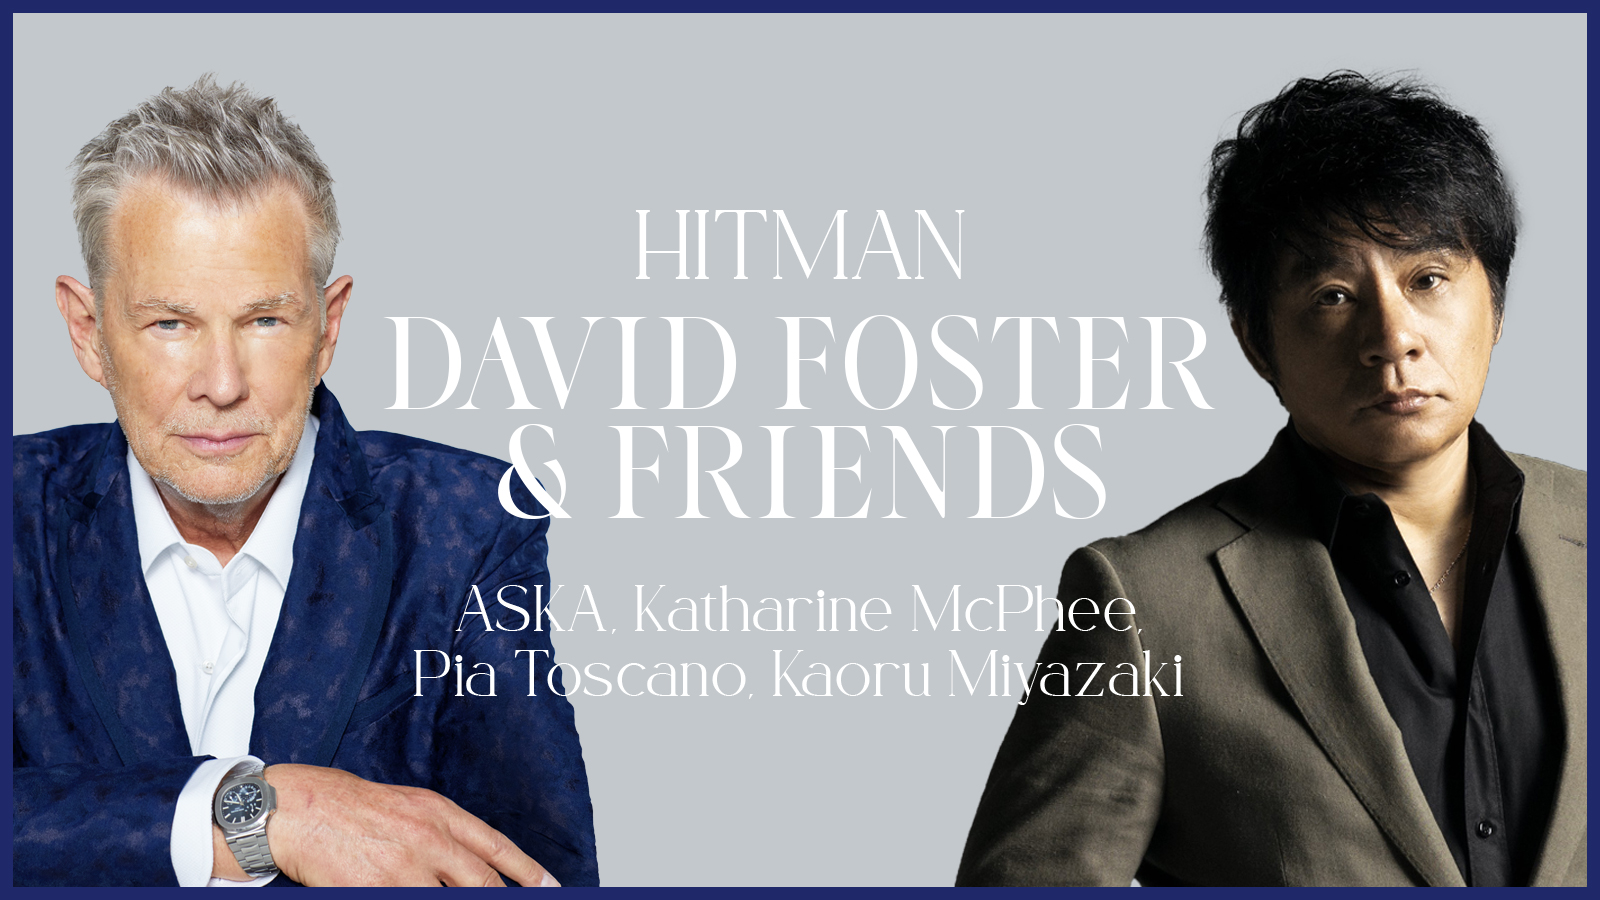 HITMAN David Foster & Friends ASKA , Katharine McPhee, Pia Toscano